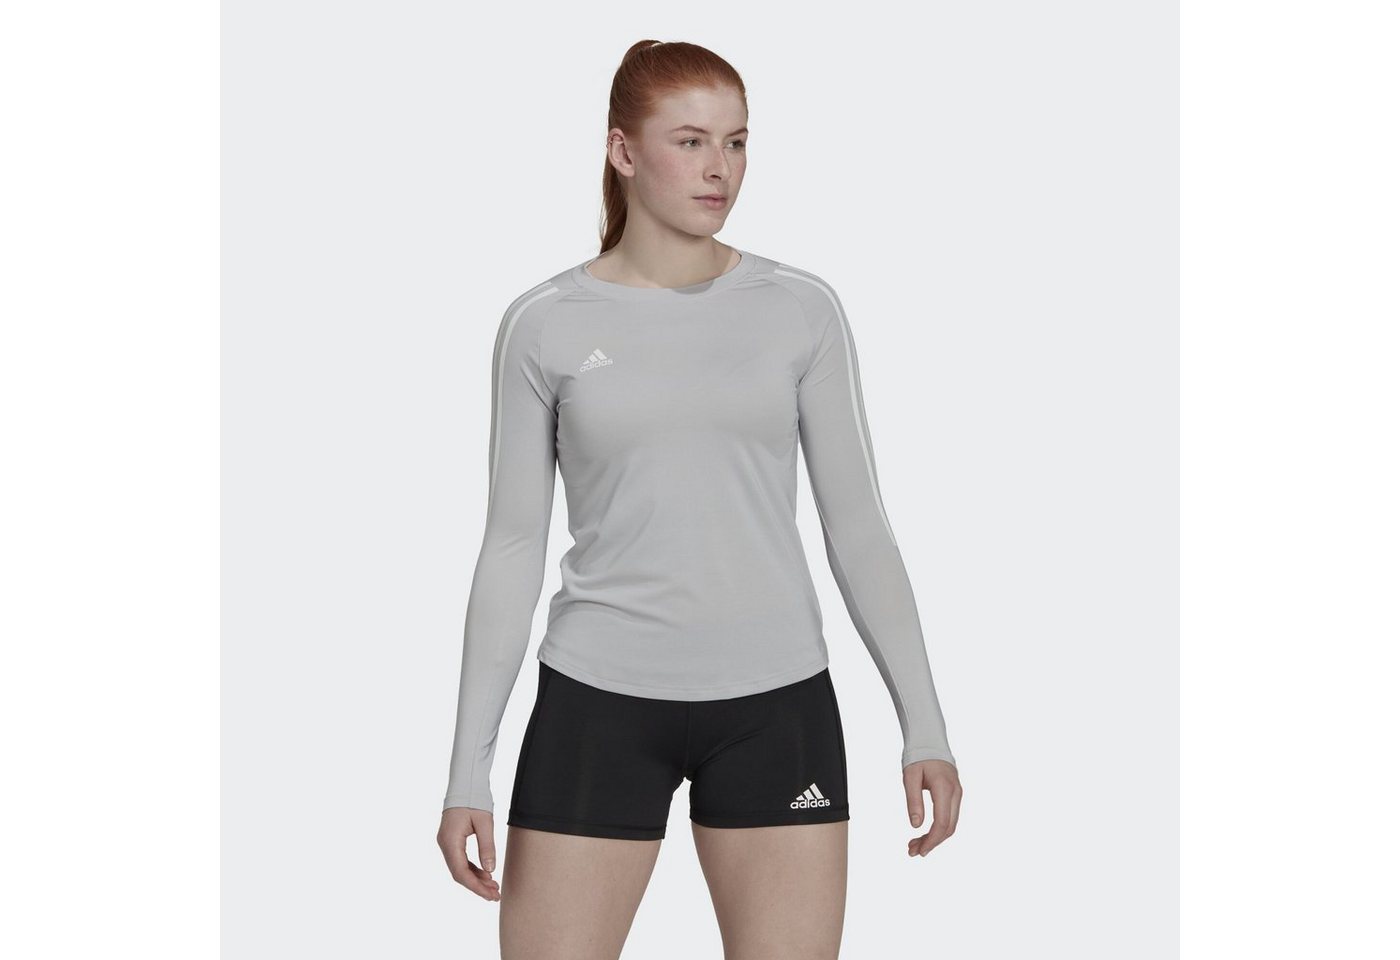 adidas Performance Volleyballtrikot HILO LONGSLEEVE › grau  - Onlineshop OTTO